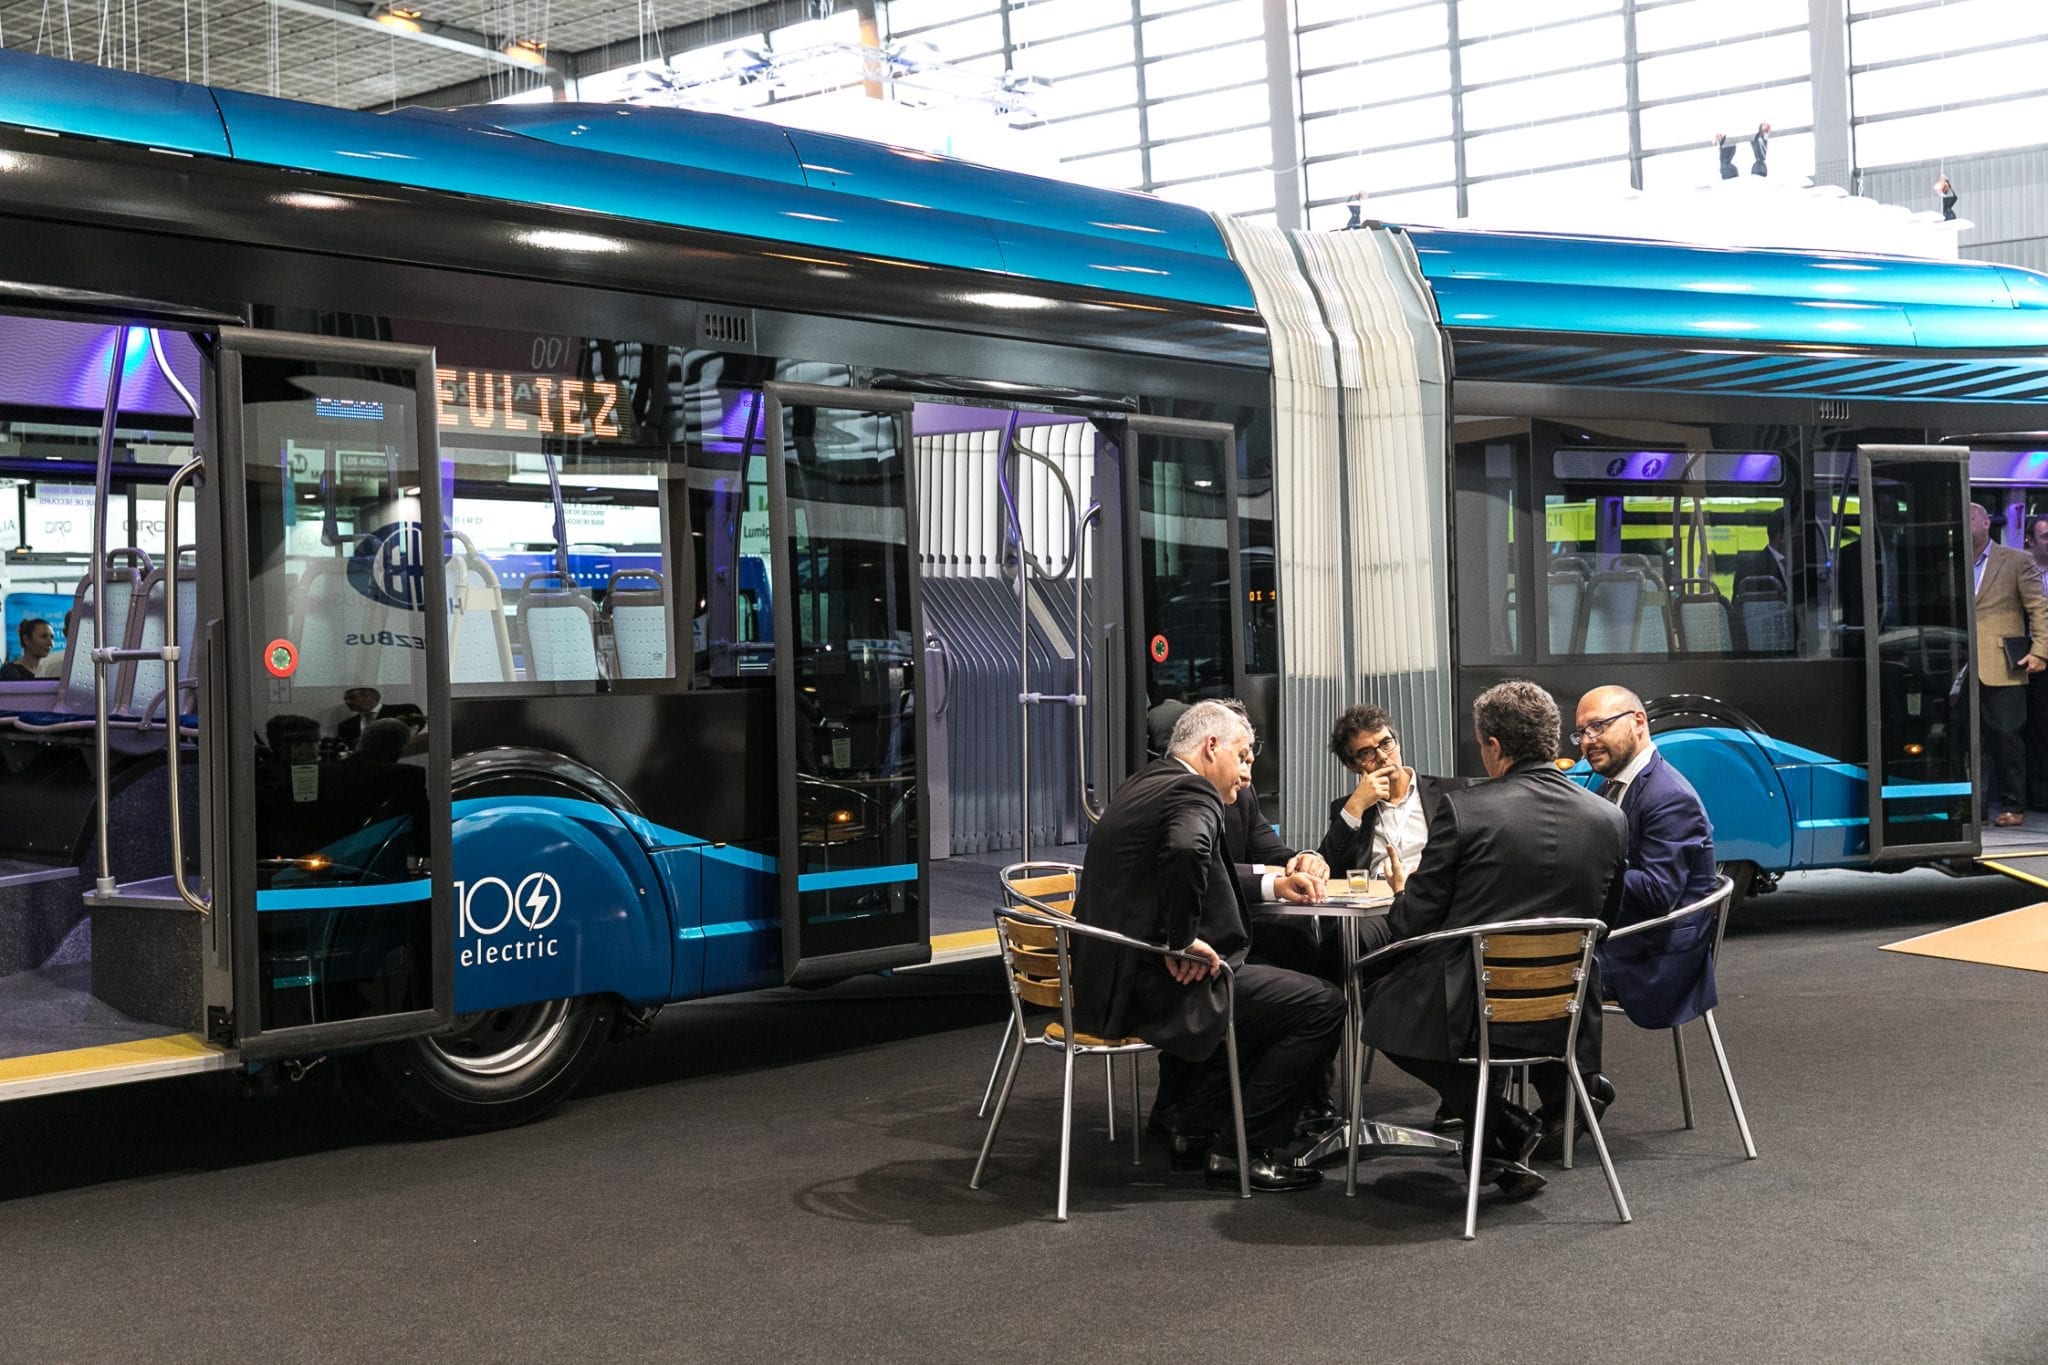 rencontres transport public 2021